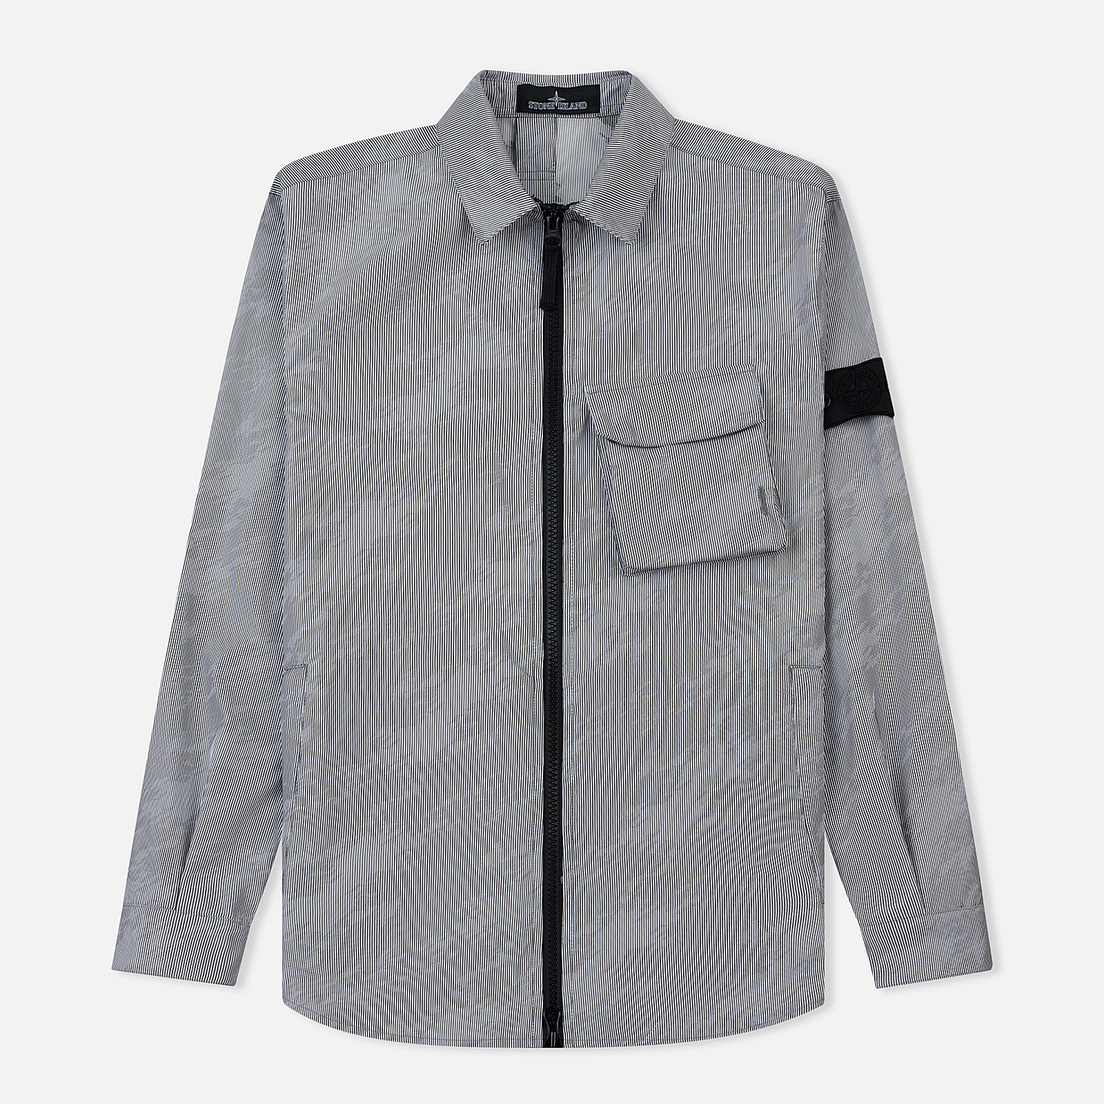 Stone Island Shadow Project Мужская куртка Lenticular Jacquard Zip Shirt